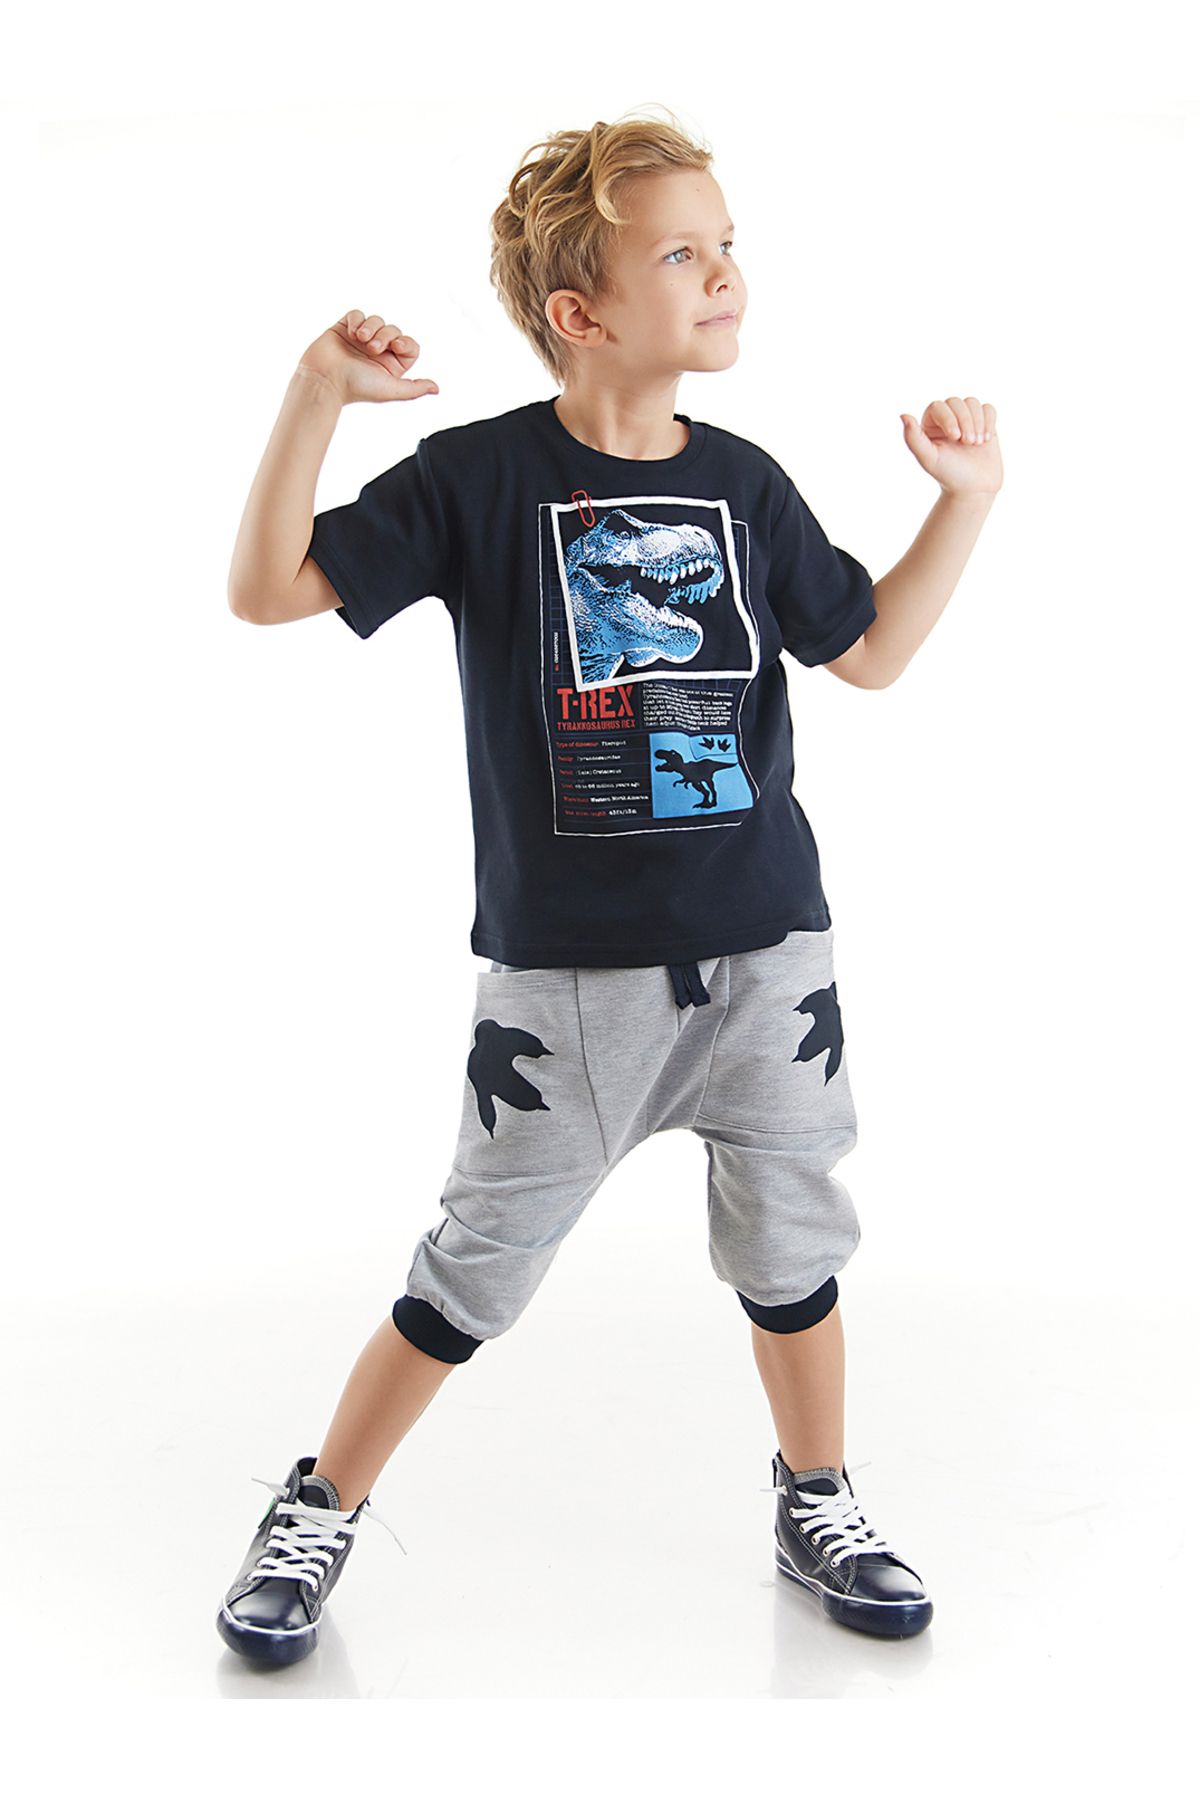 MSHB&G T-rex Info Erkek Çocuk T-shirt Kapri Şort Takım